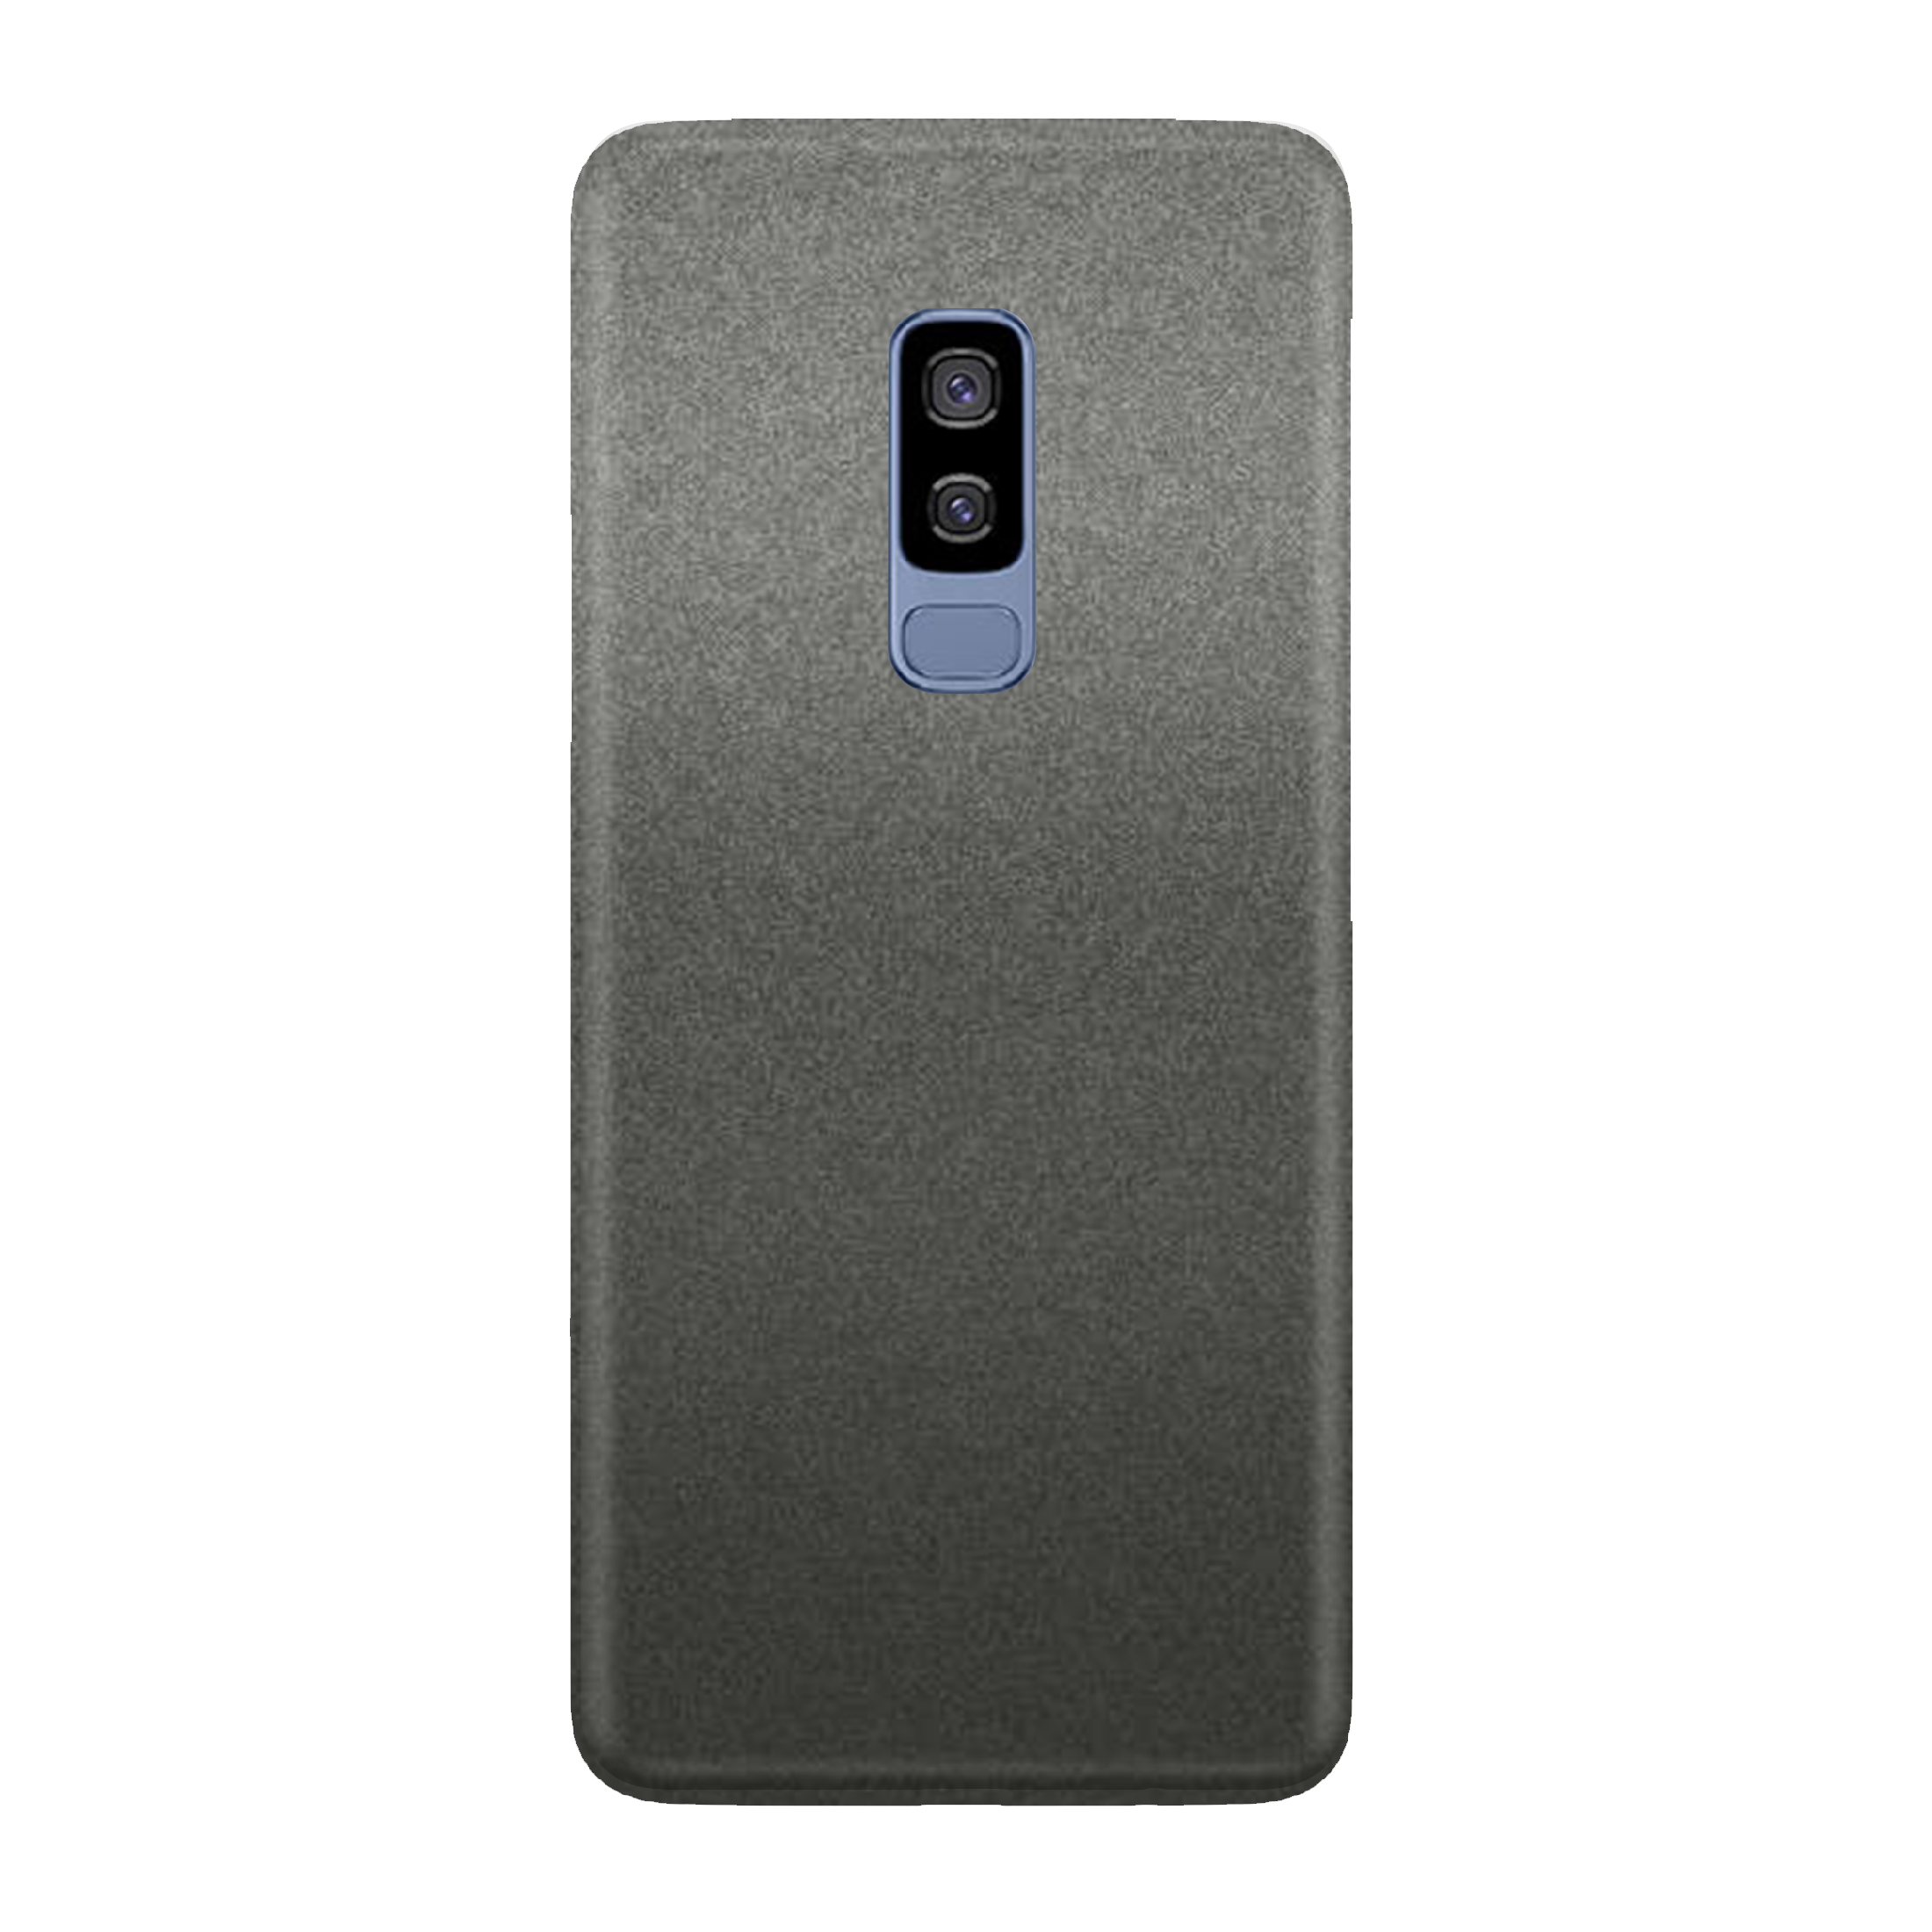 Matte Charcoal Metallic Skin for Samsung S9 Plus